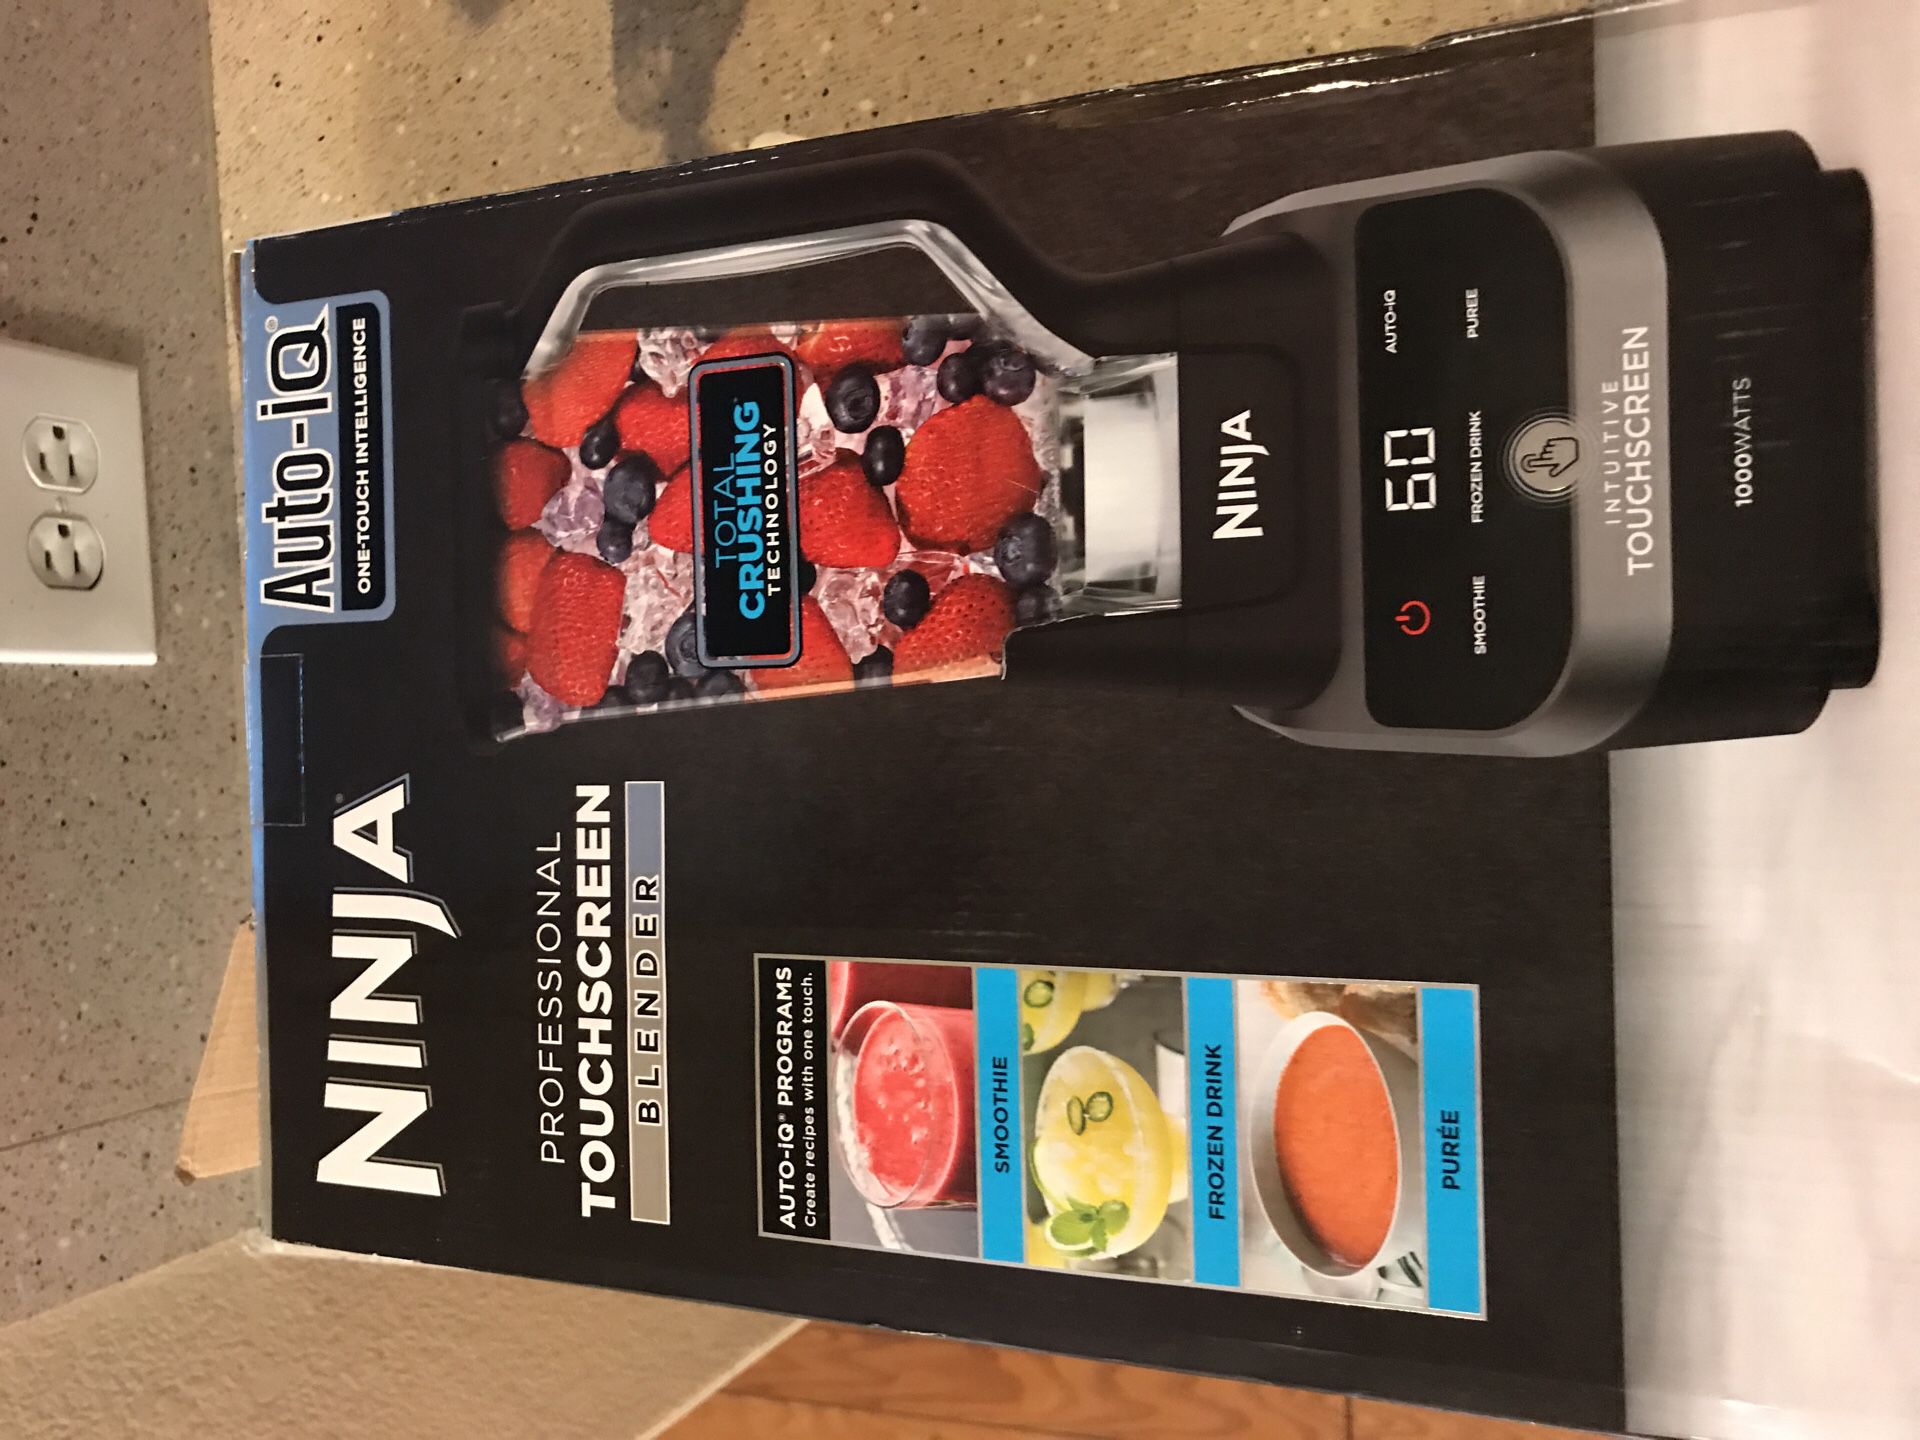 Brand new touchscreen blender with the ninja nutrition vitamin blender both brand new in the box